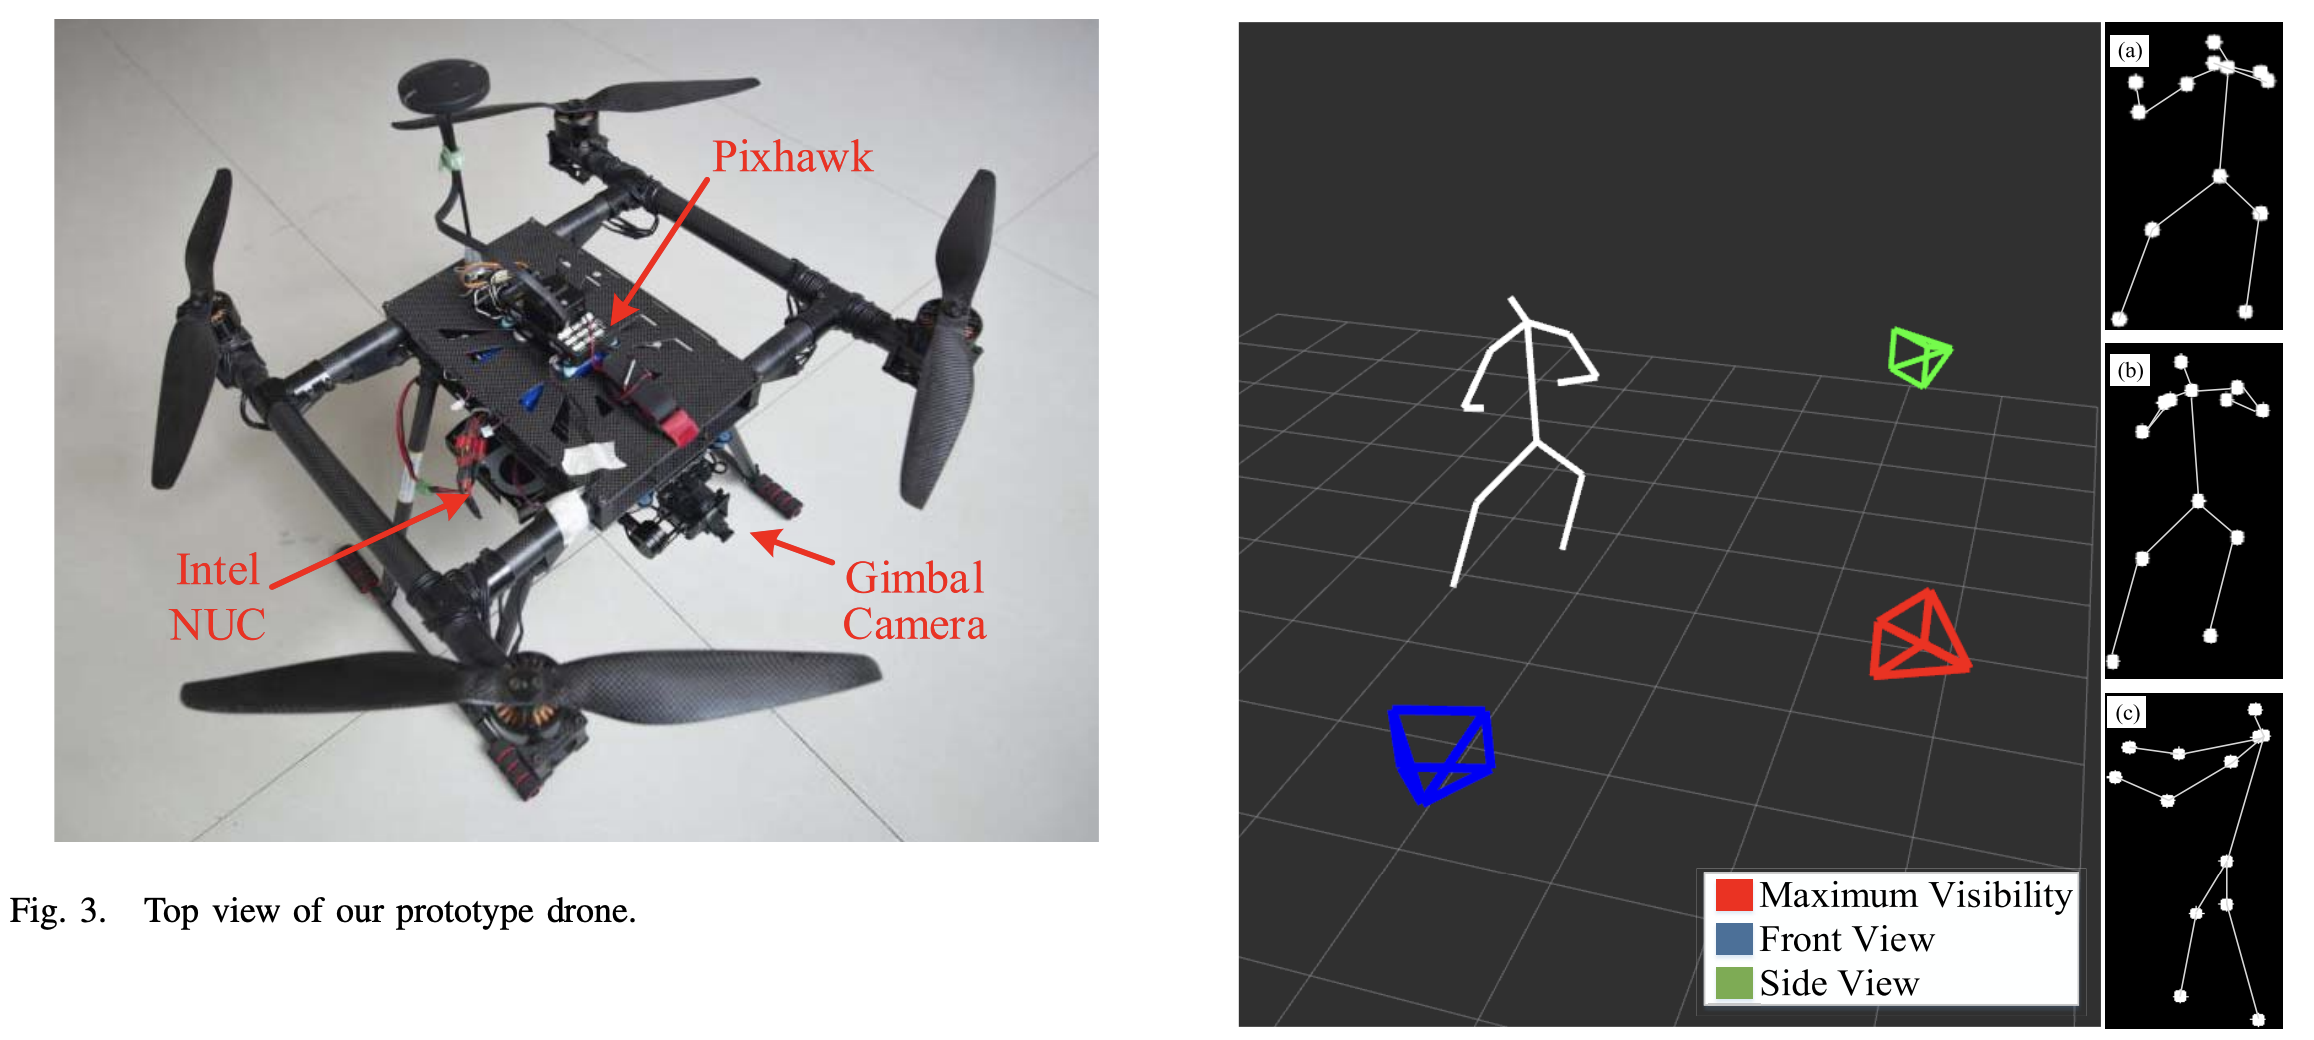 Imitation Learning-Based Algorithm for Drone Cinematography System